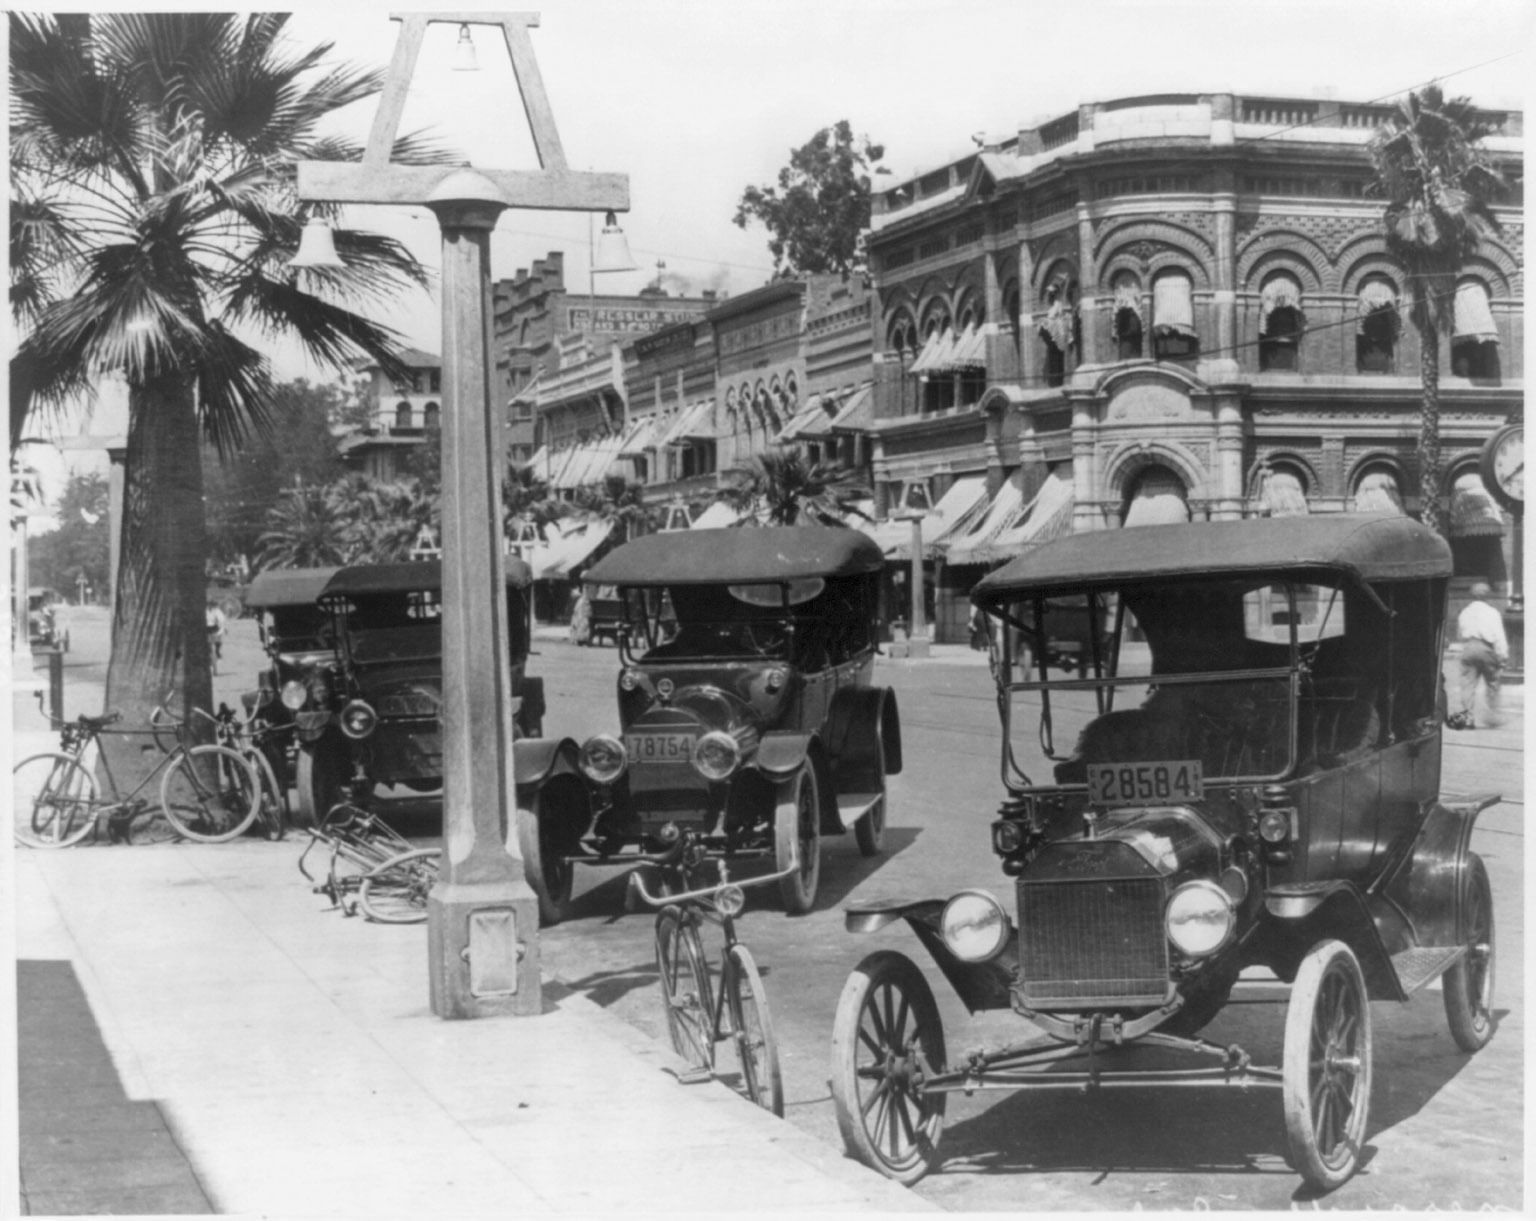 Vintage cars parked on street near Mission Inn Riverside